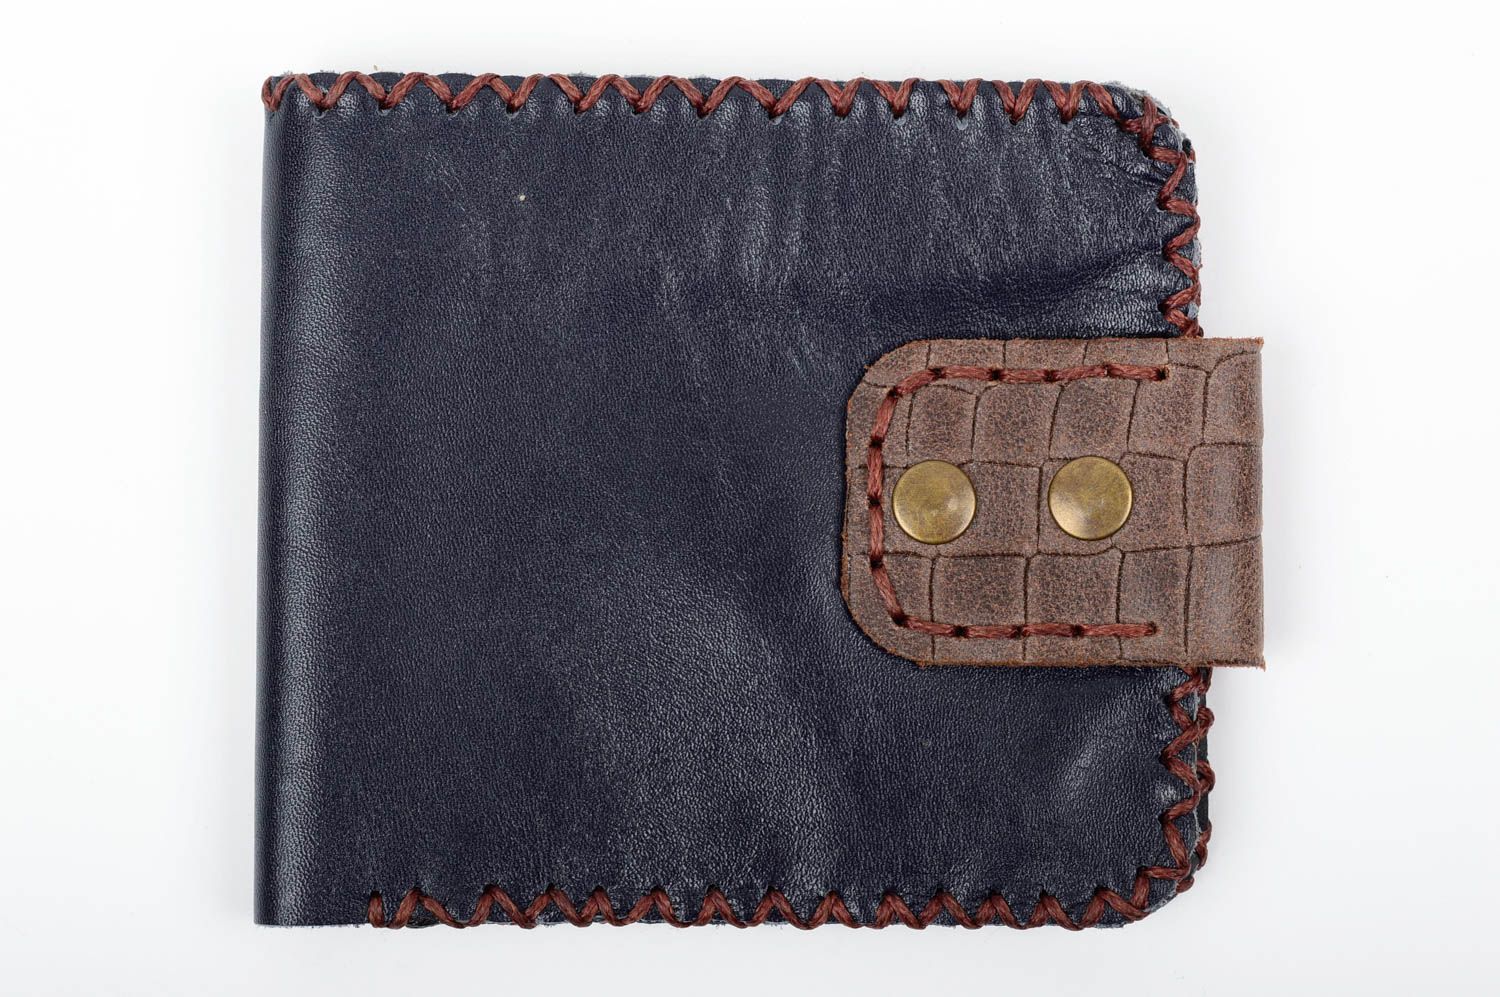 Leather handmade wallet blue unisex purse unusual designer accessory cute gift photo 1